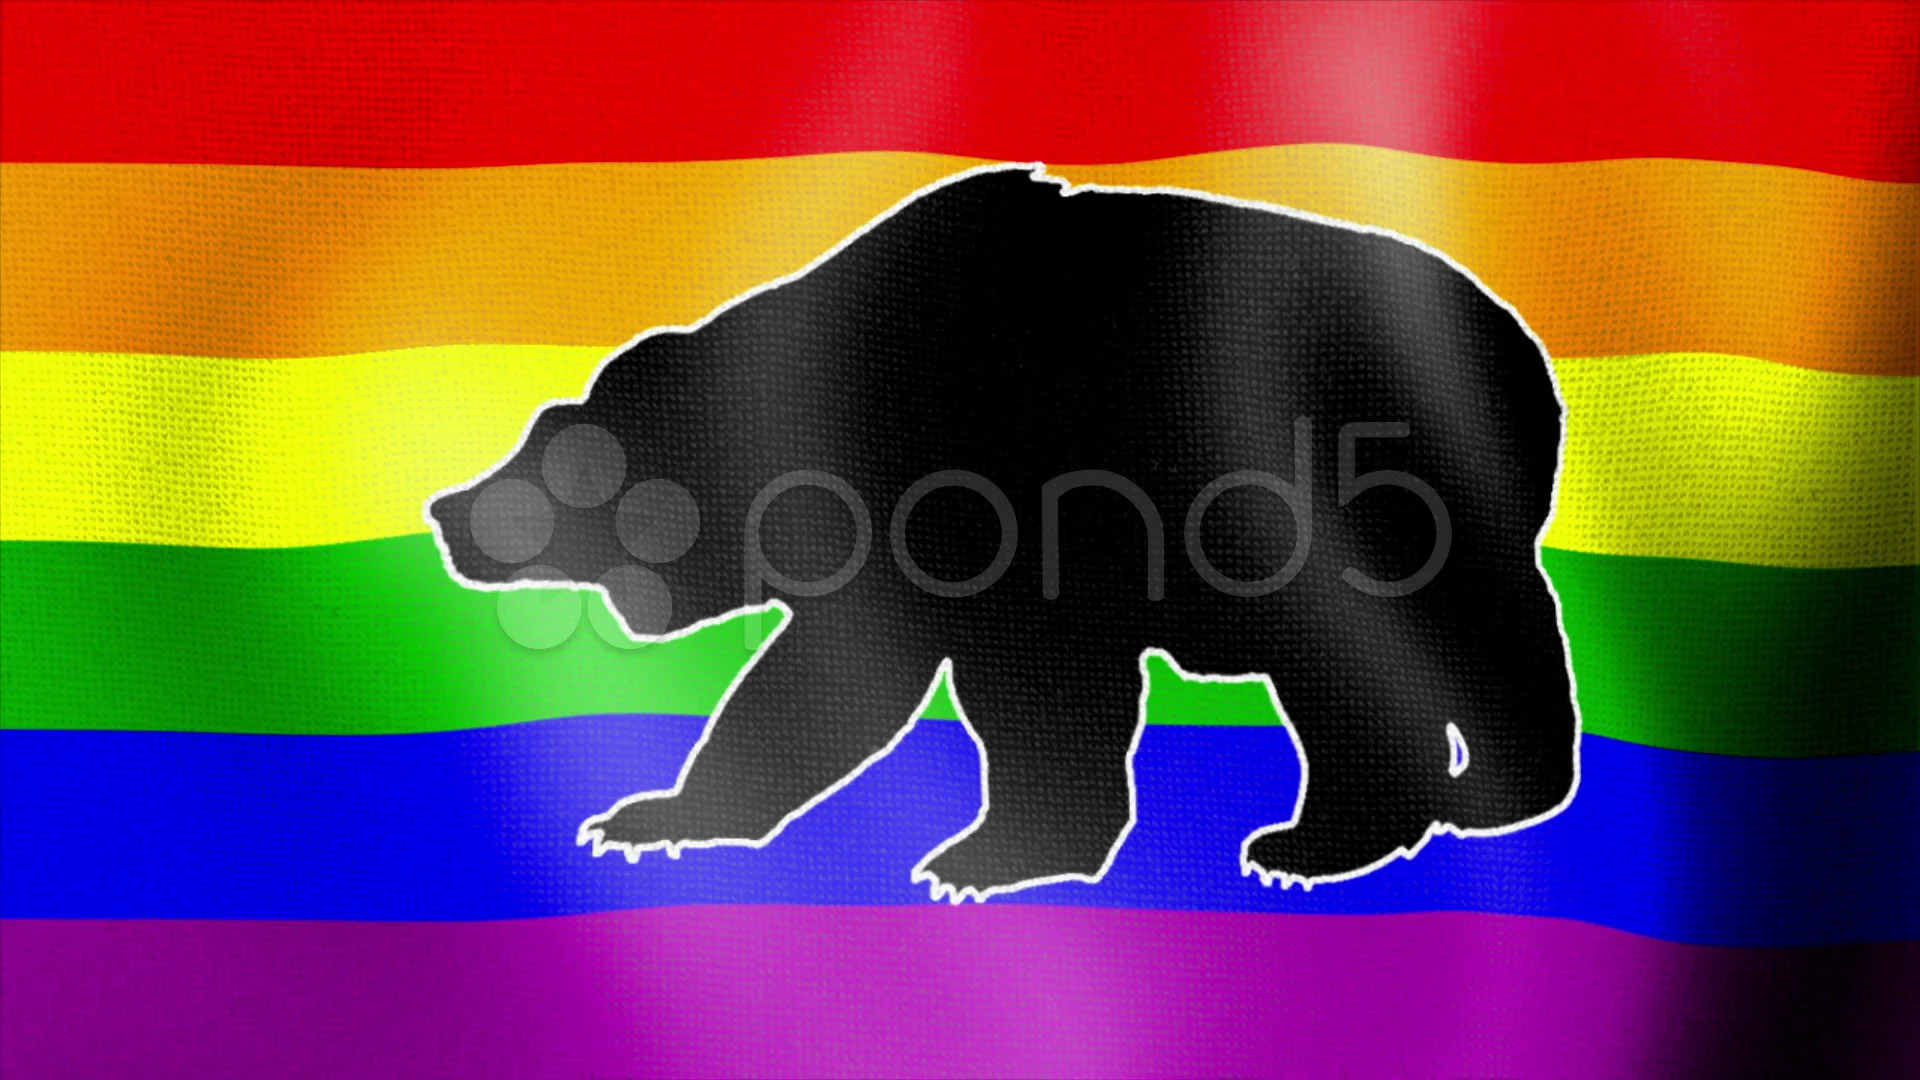  I Know What Bears Want LGBT Rainbow Bear Gay Pride